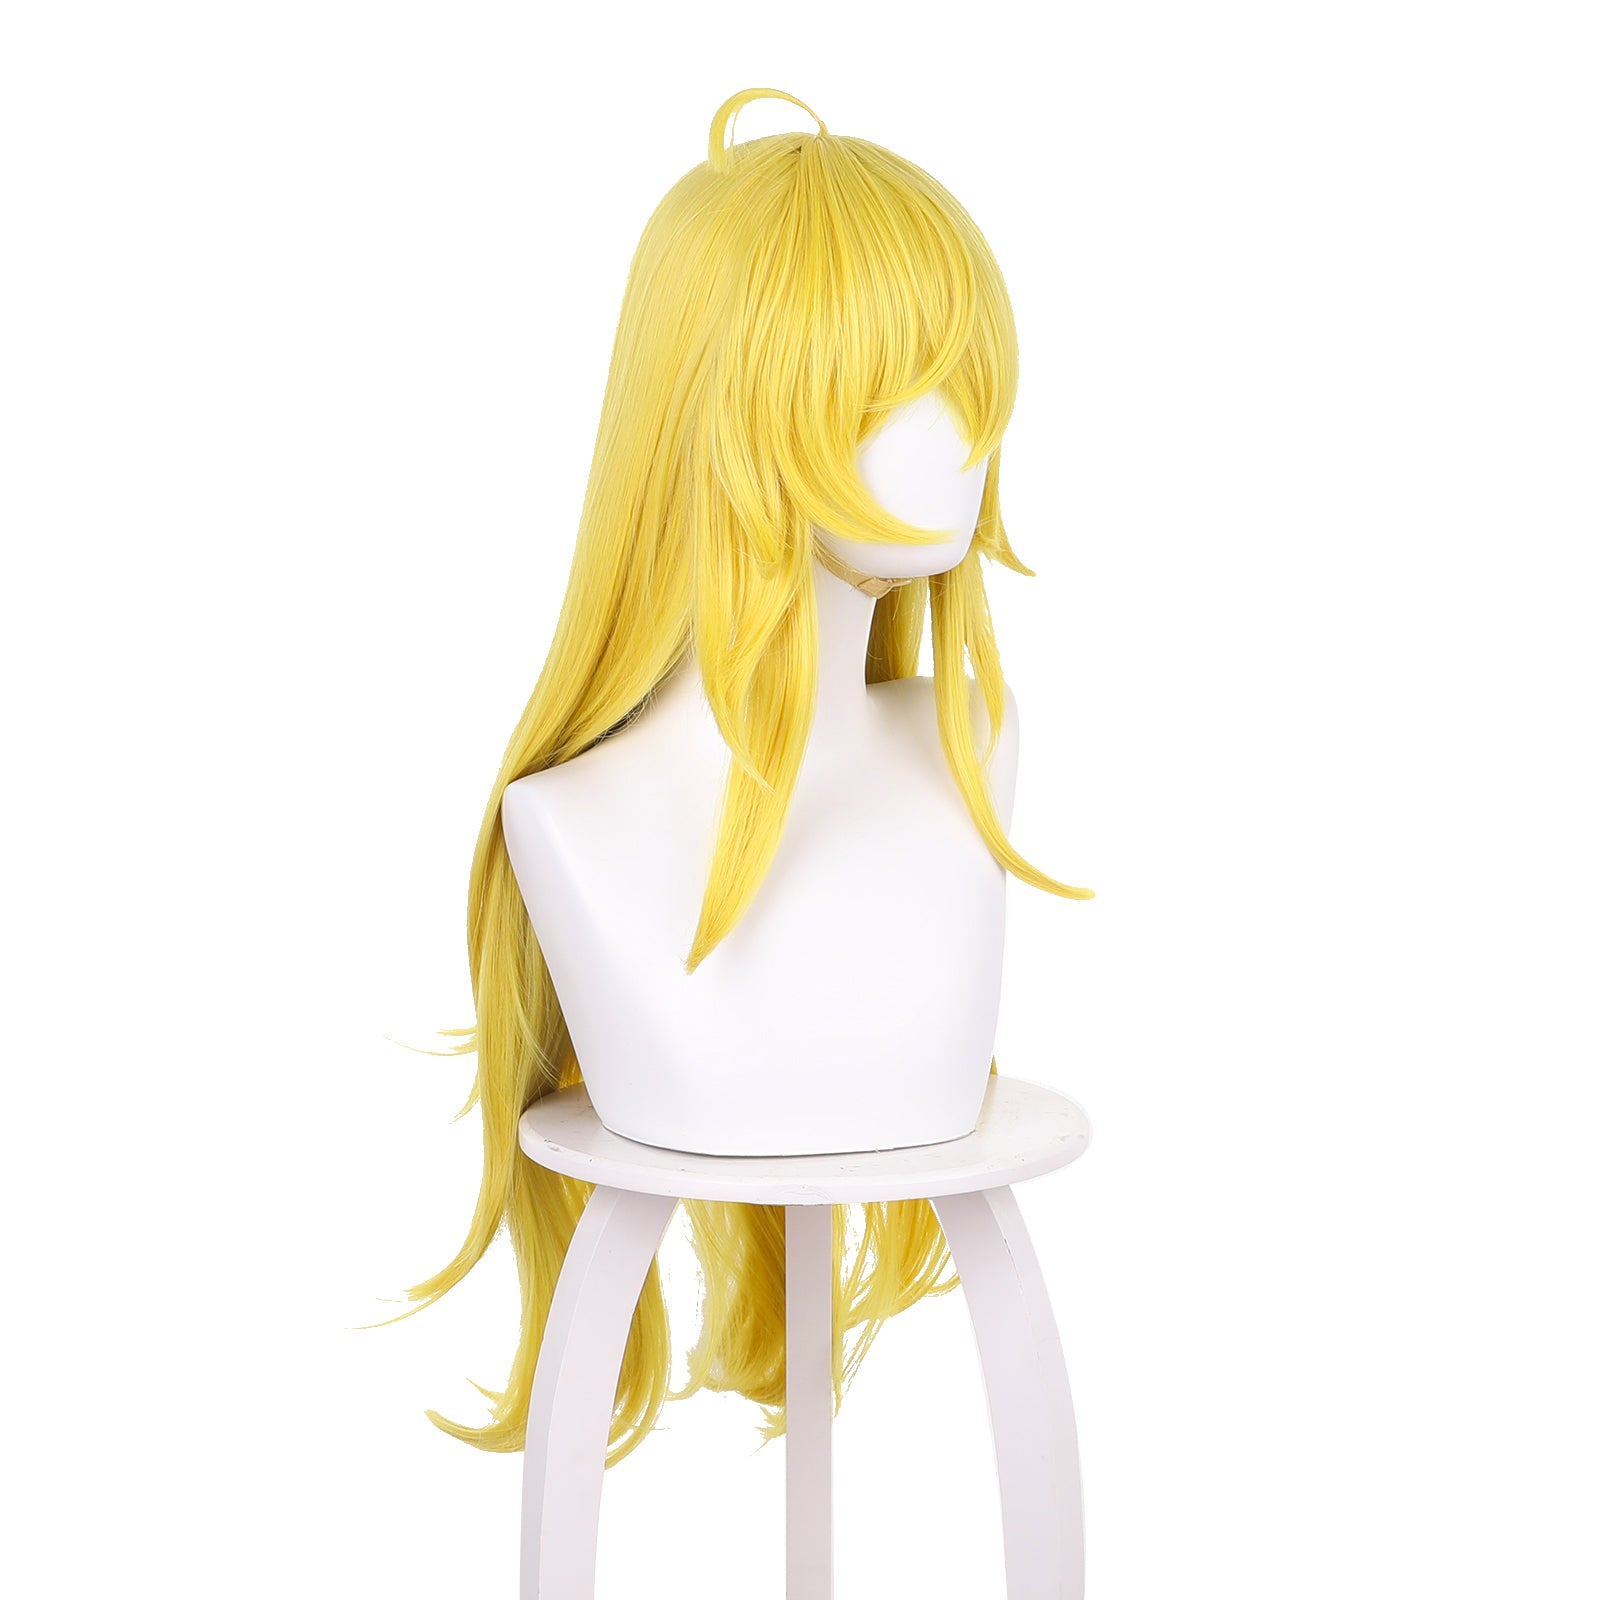 Rulercosplay Anime RWBY ICE QUEENDOM Yang Xiao Long yellow Long Cosplay Wig